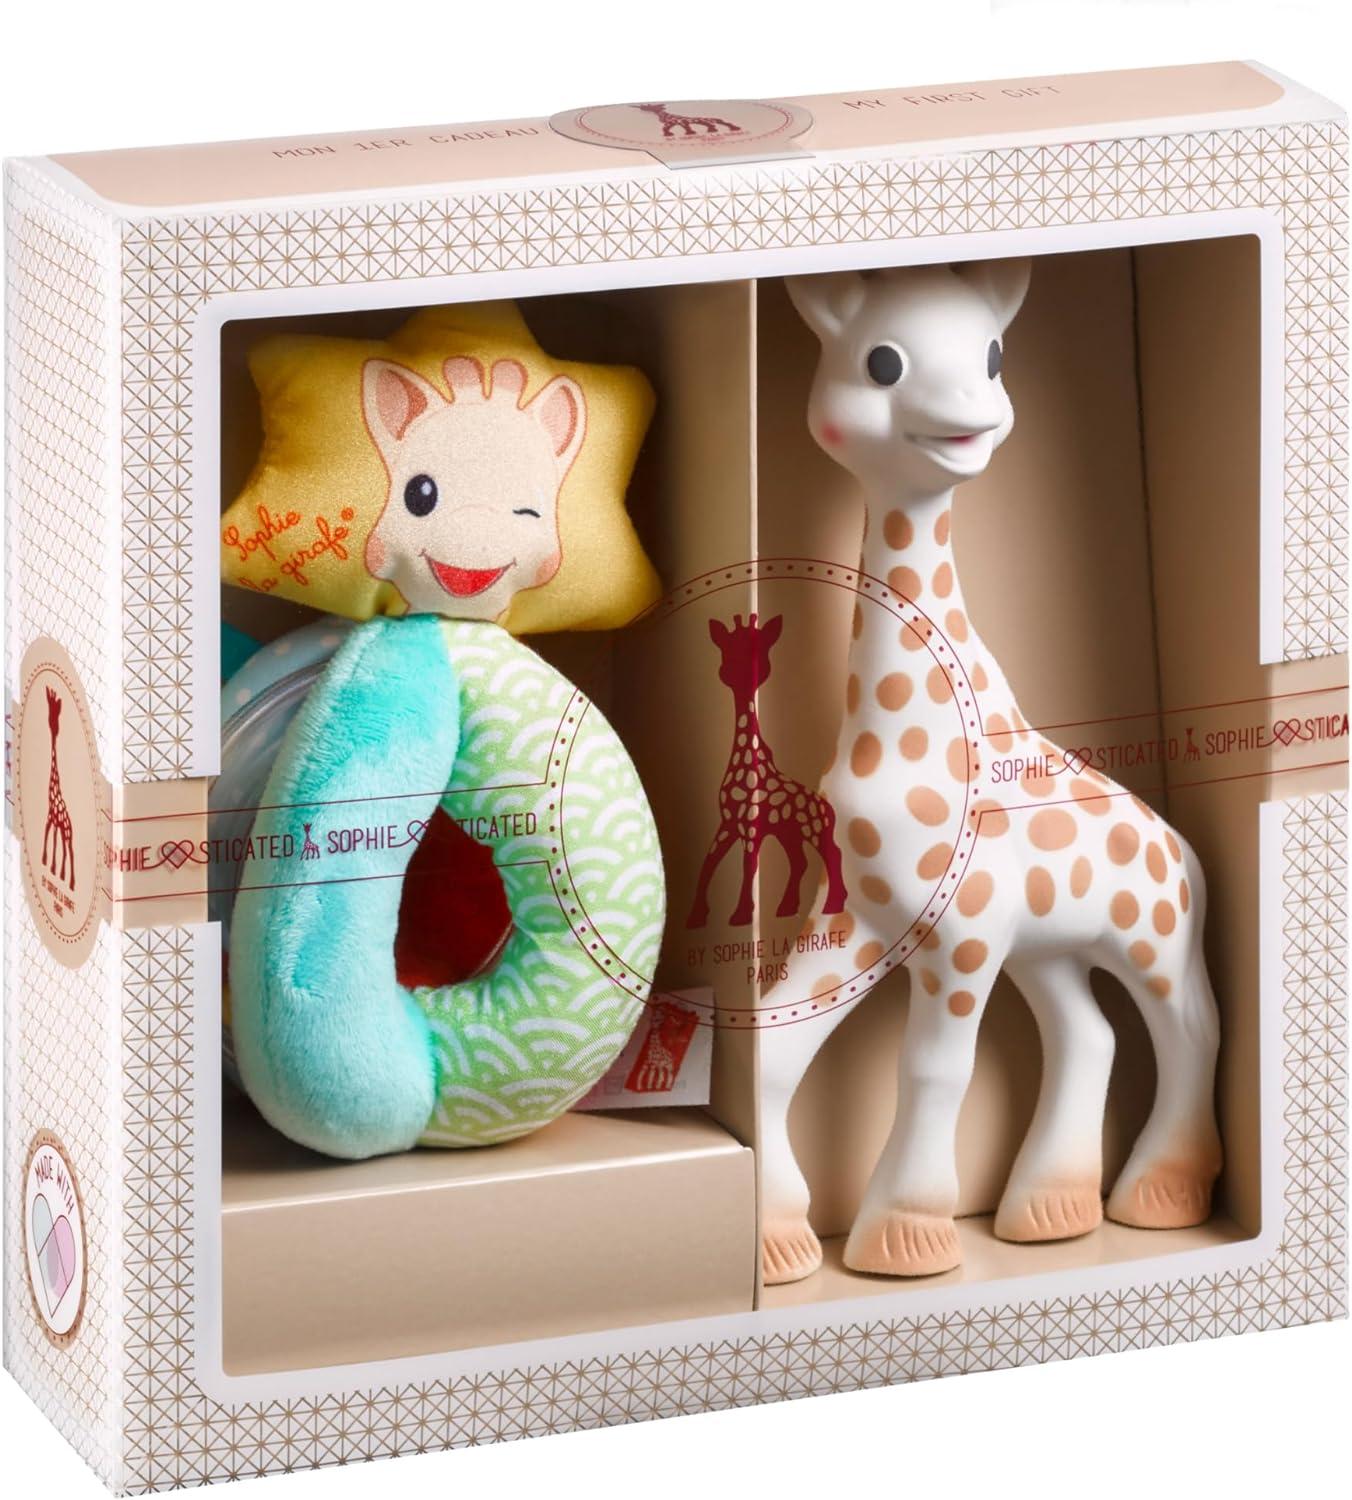  Sophie by Me 60th Anniversary Edition Teether Sensory  Developmental Toy SOPHIE LA GIRAFE Beige : Baby